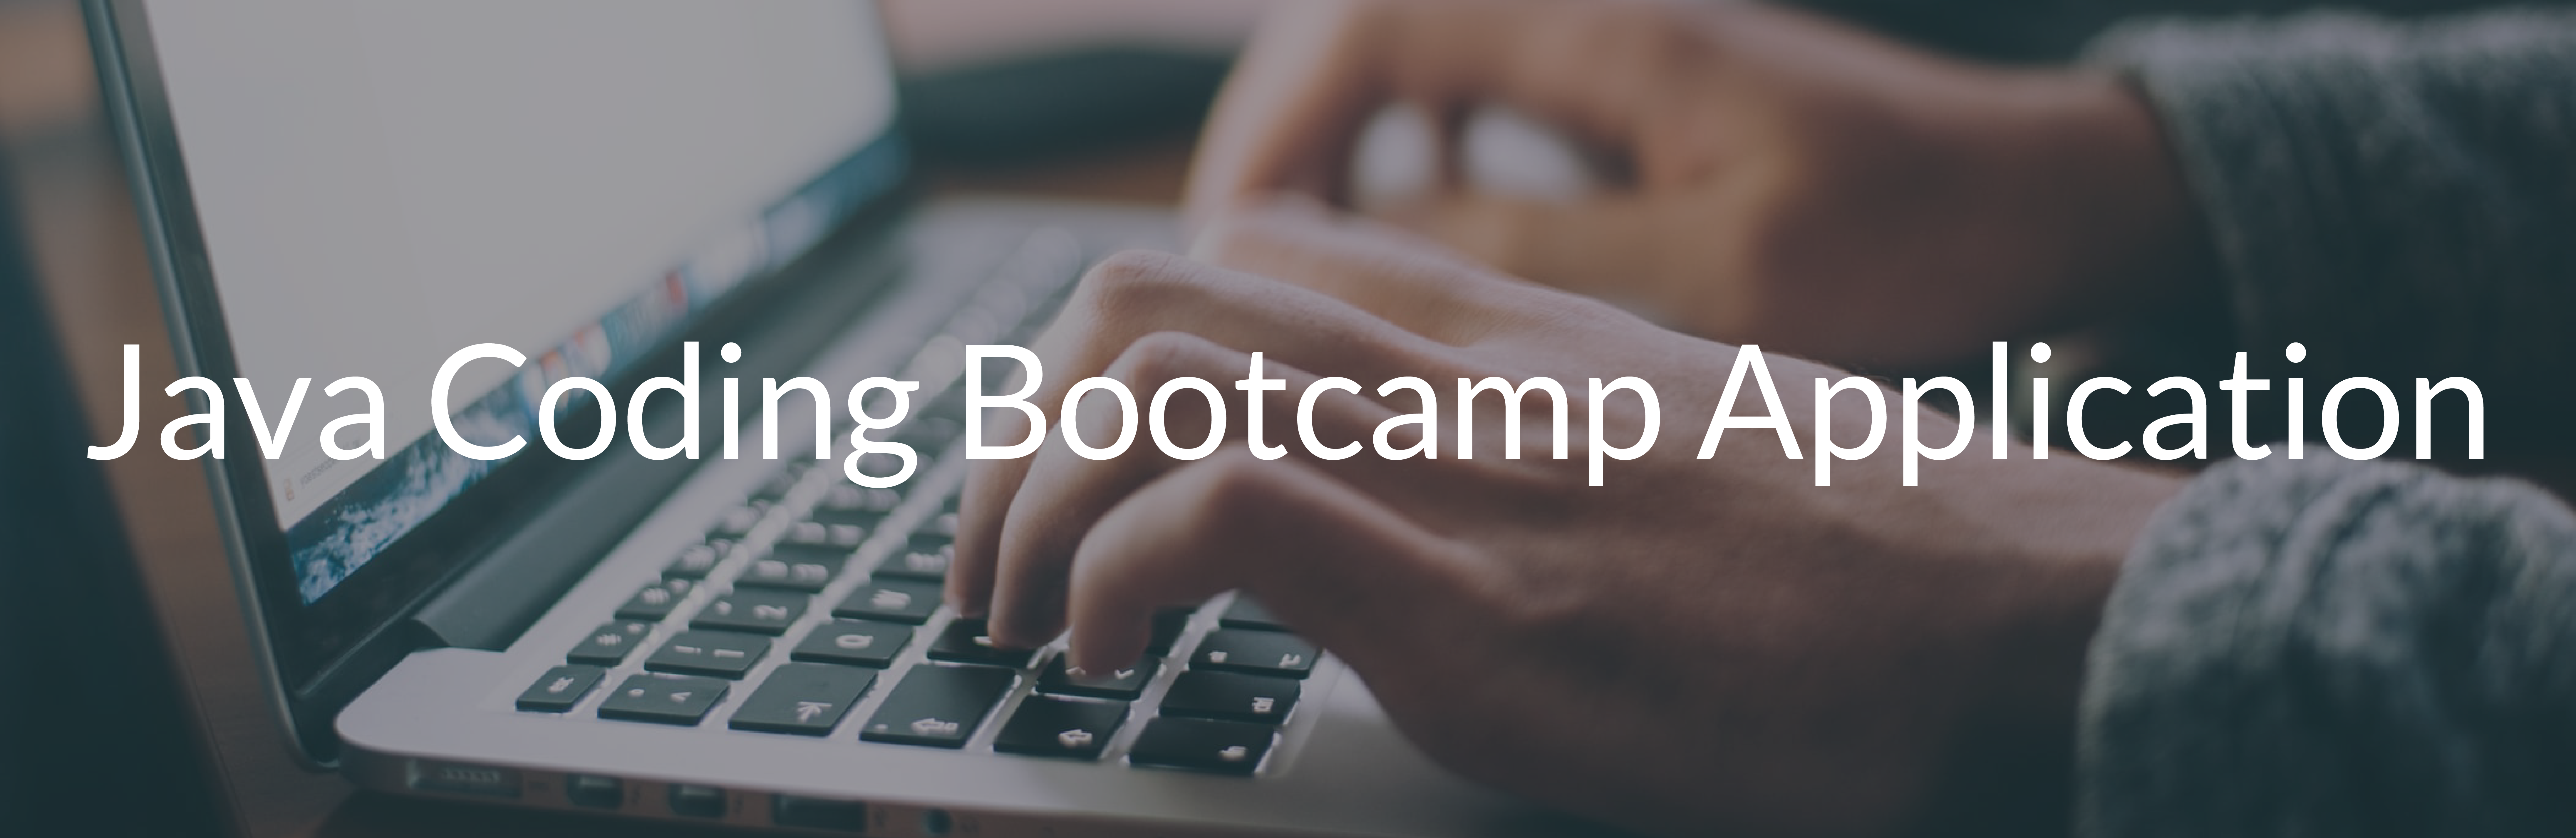 coding bootcamp